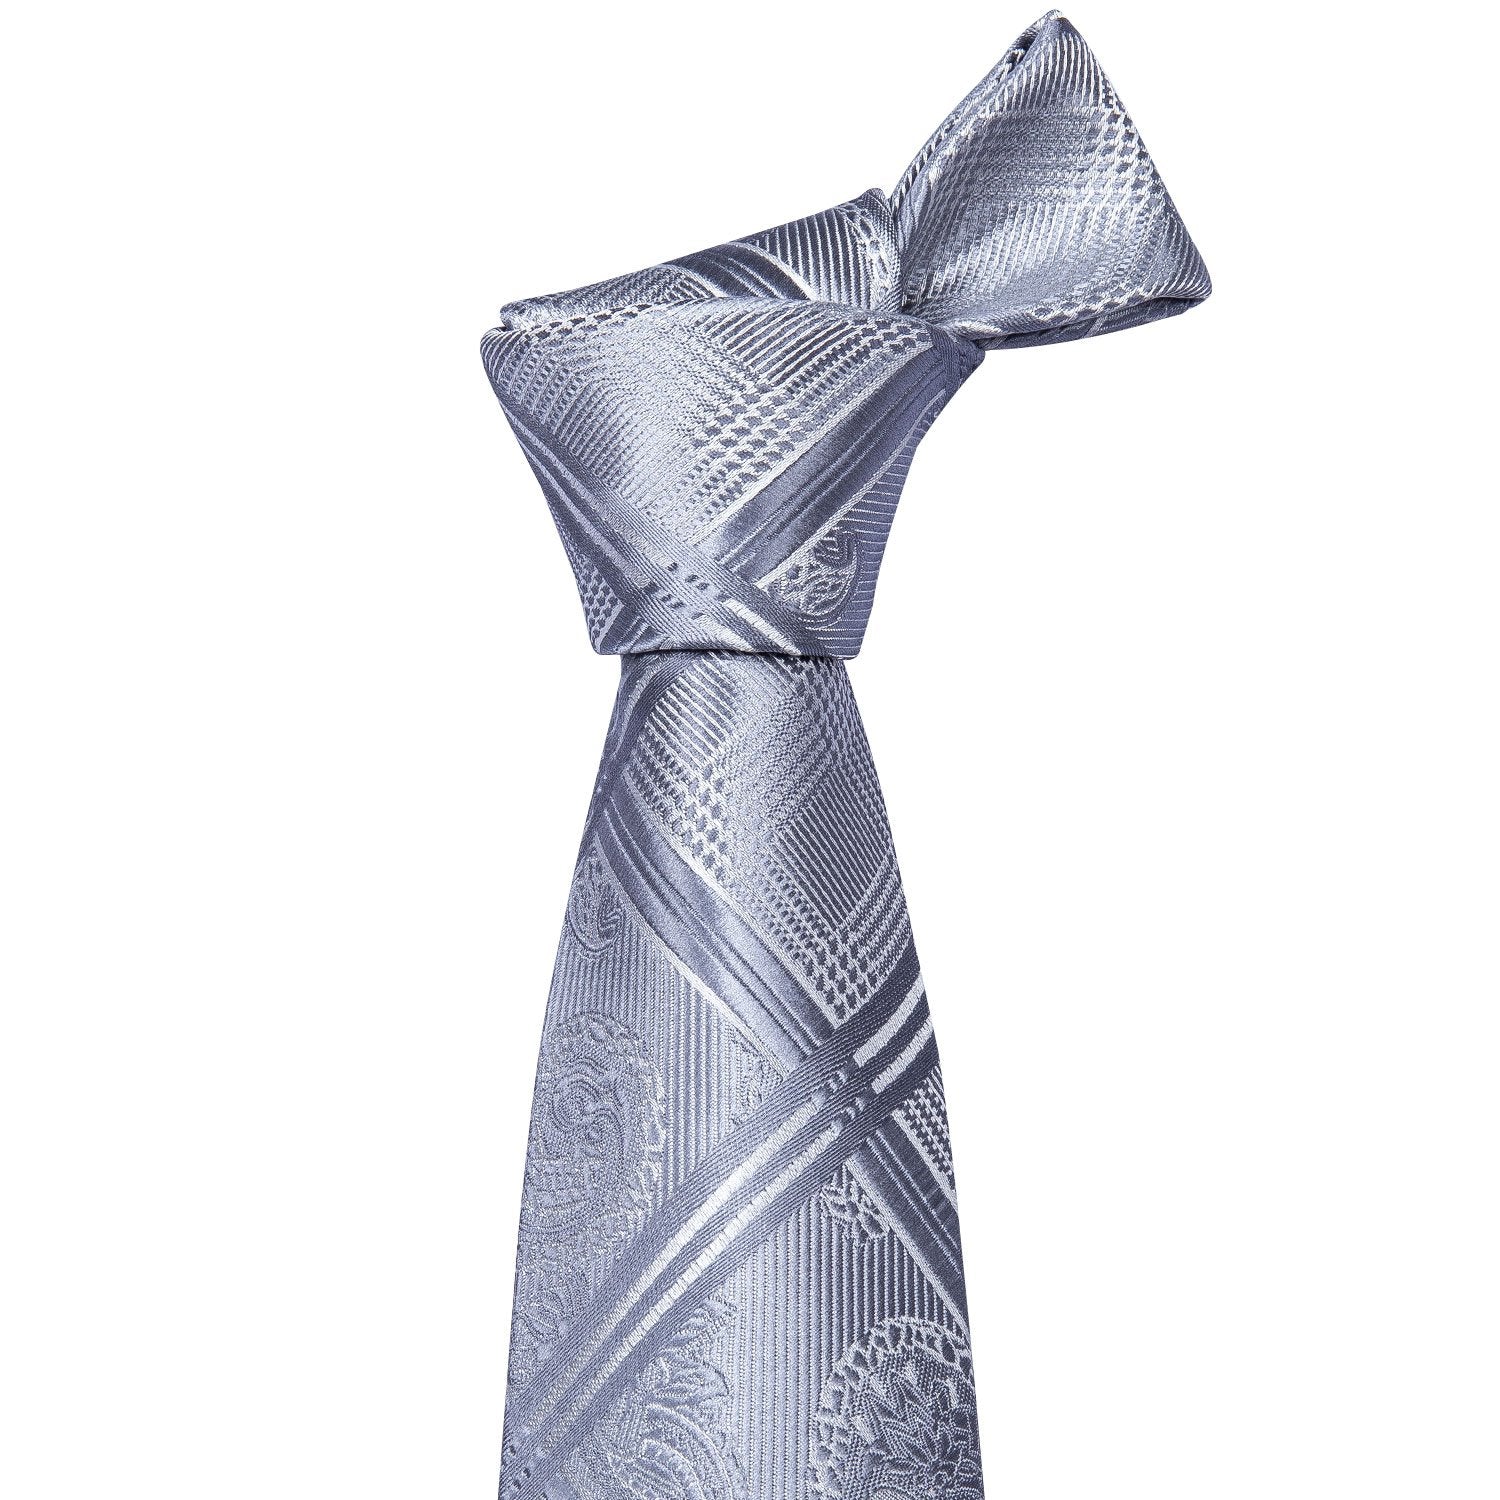 Silver Grey Plaid Necktie Pocket Square Cufflinks Set - barry-wang